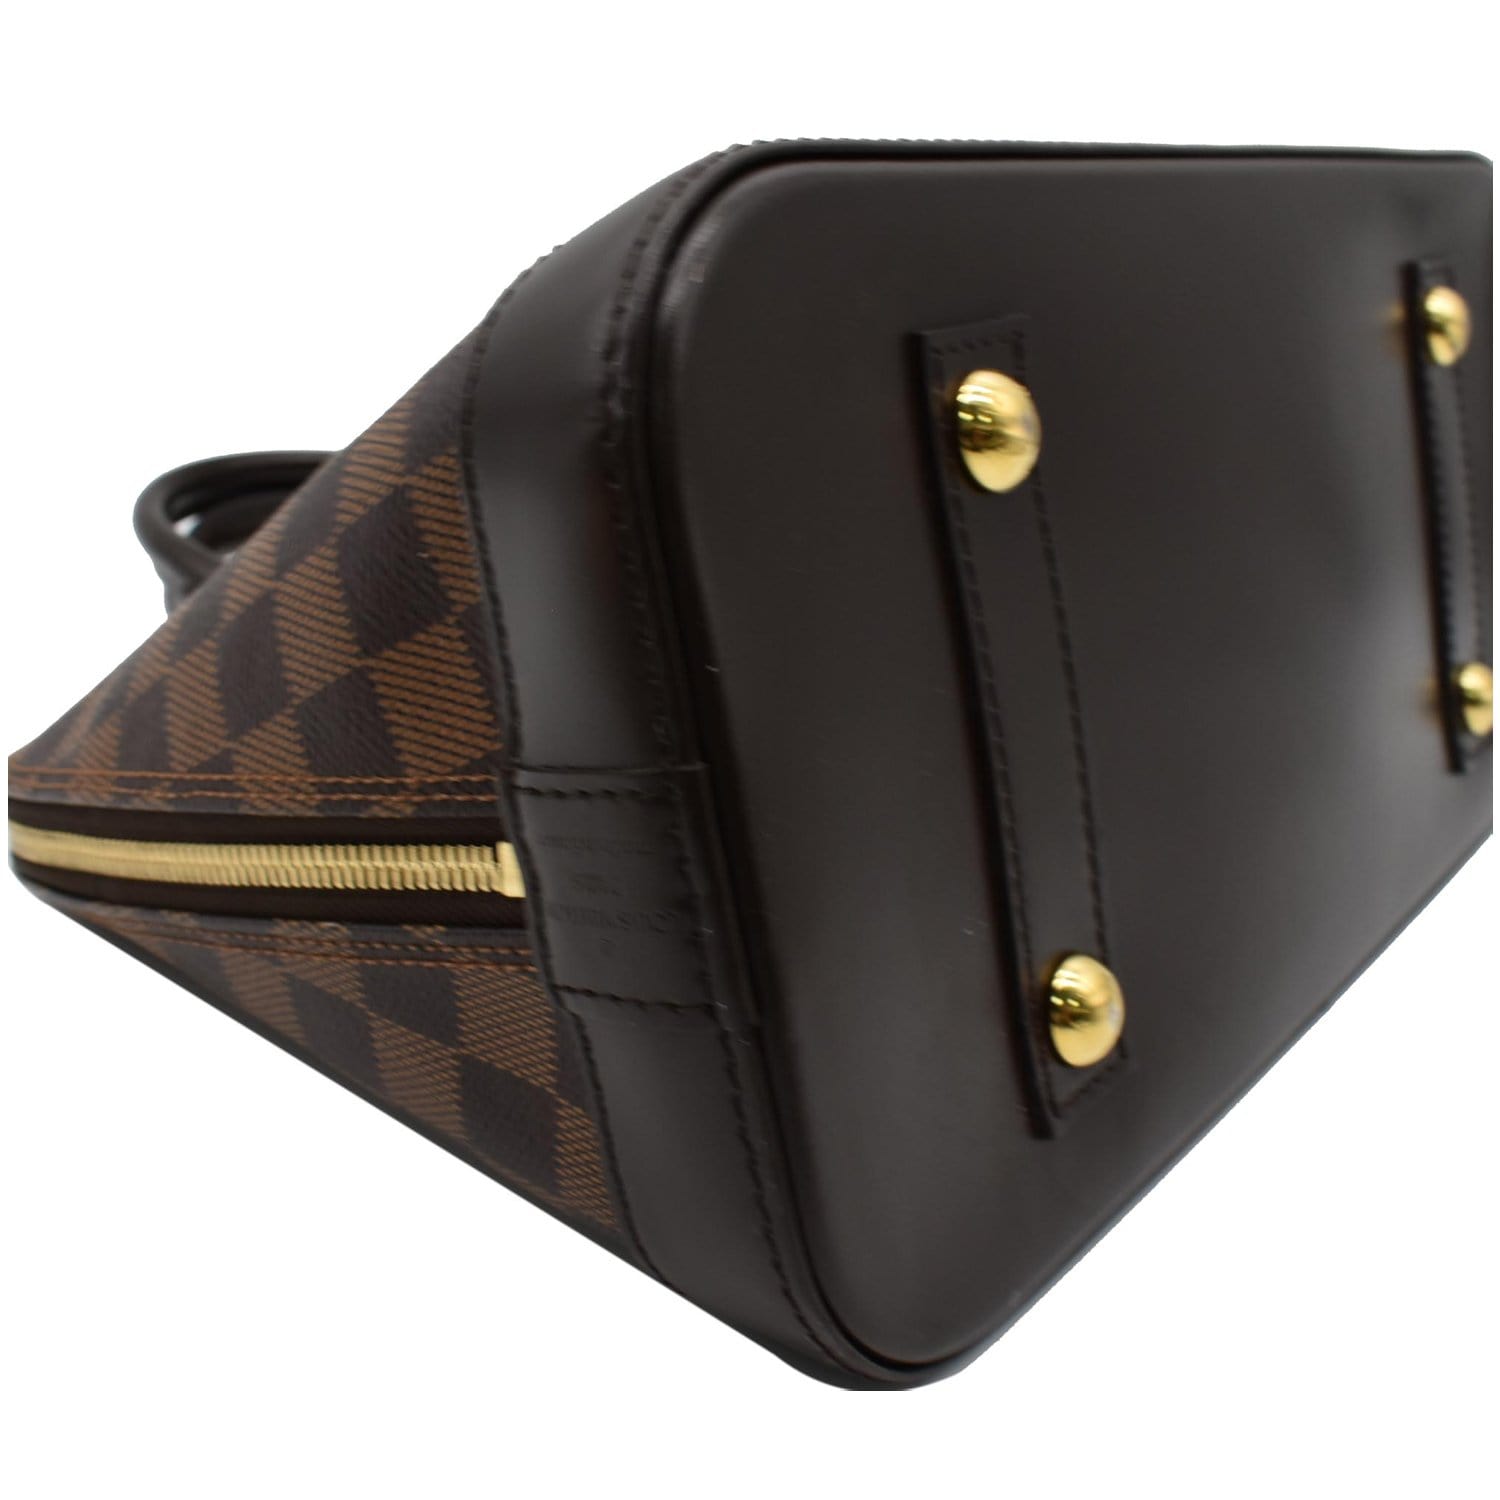 Louis Vuitton Eva Damier Ebene Brown Bag with Brass Hardware